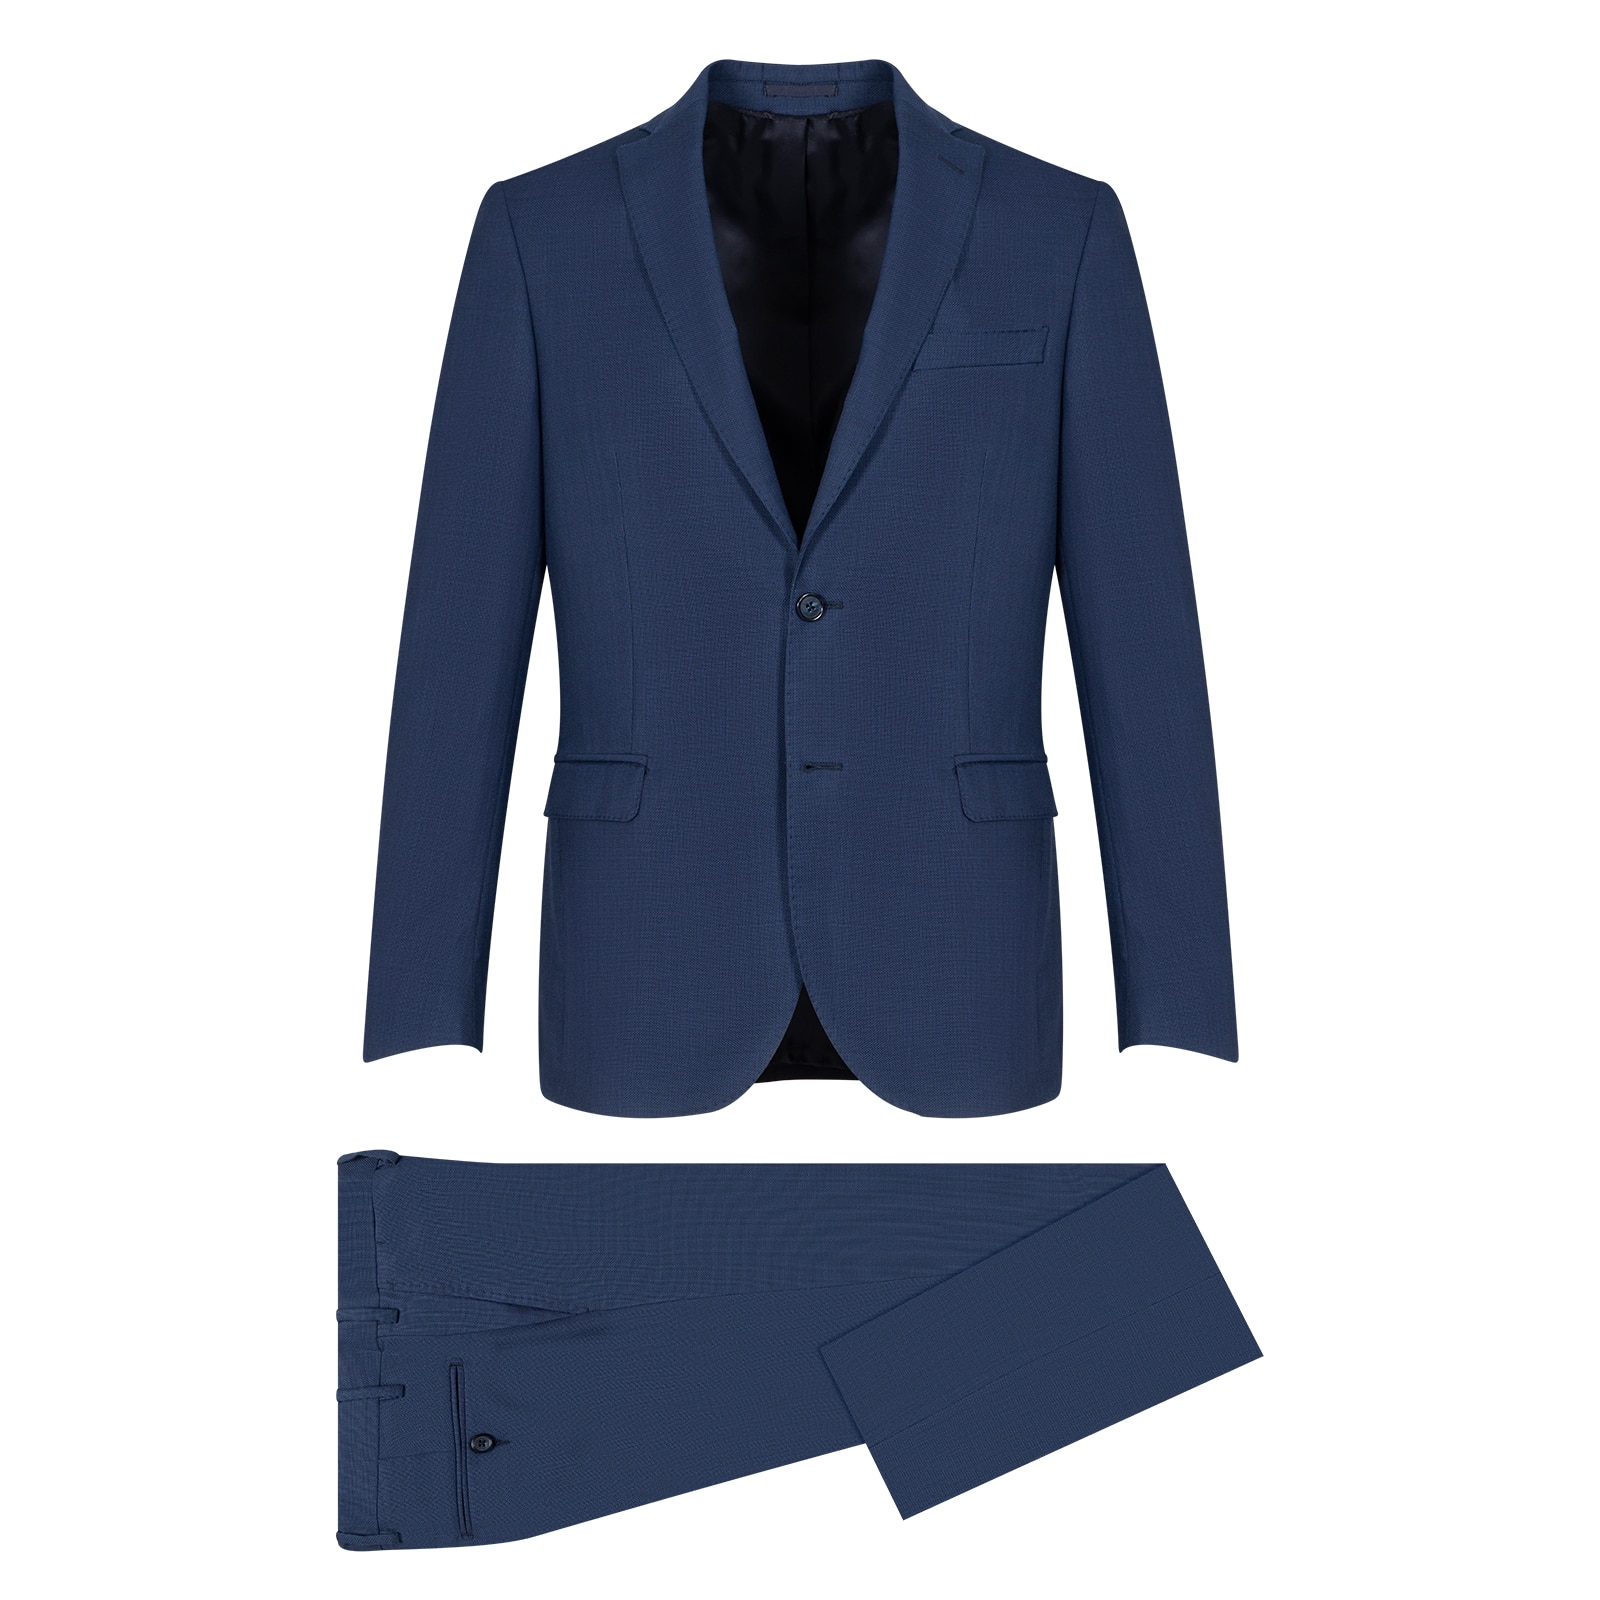 Prince Oliver Κοστούμι Μπλε 100% Wool Super 100s (Modern Fit)